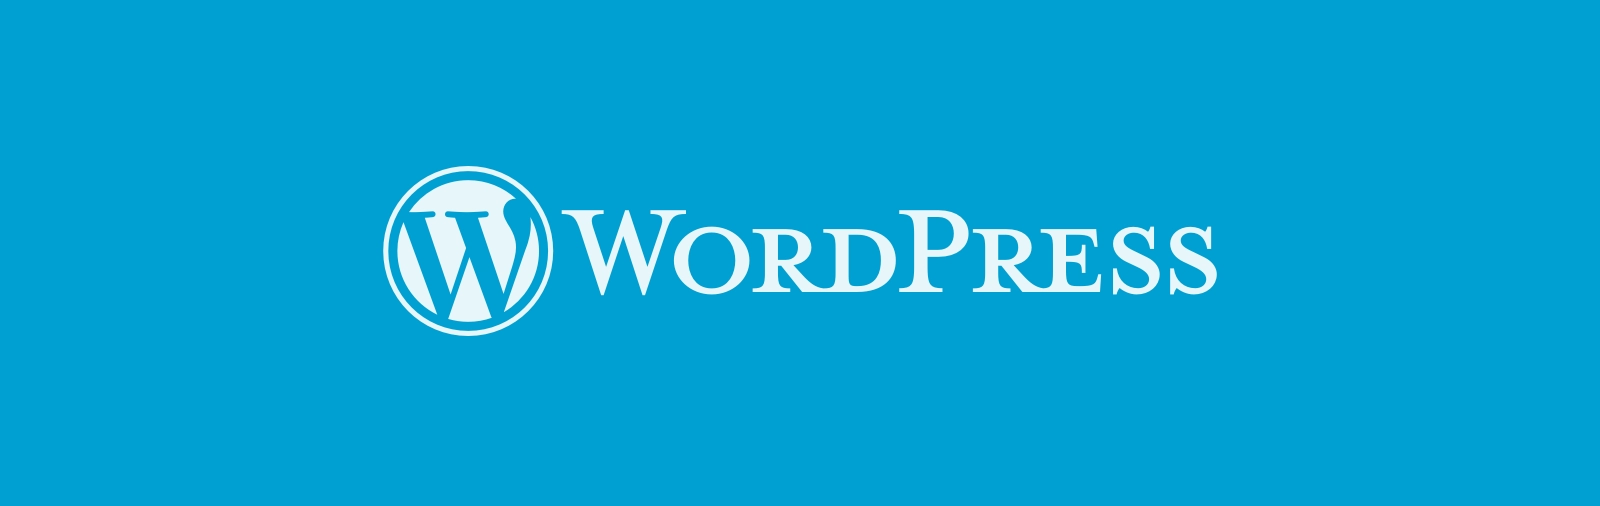 وردپرس (Wordpress)